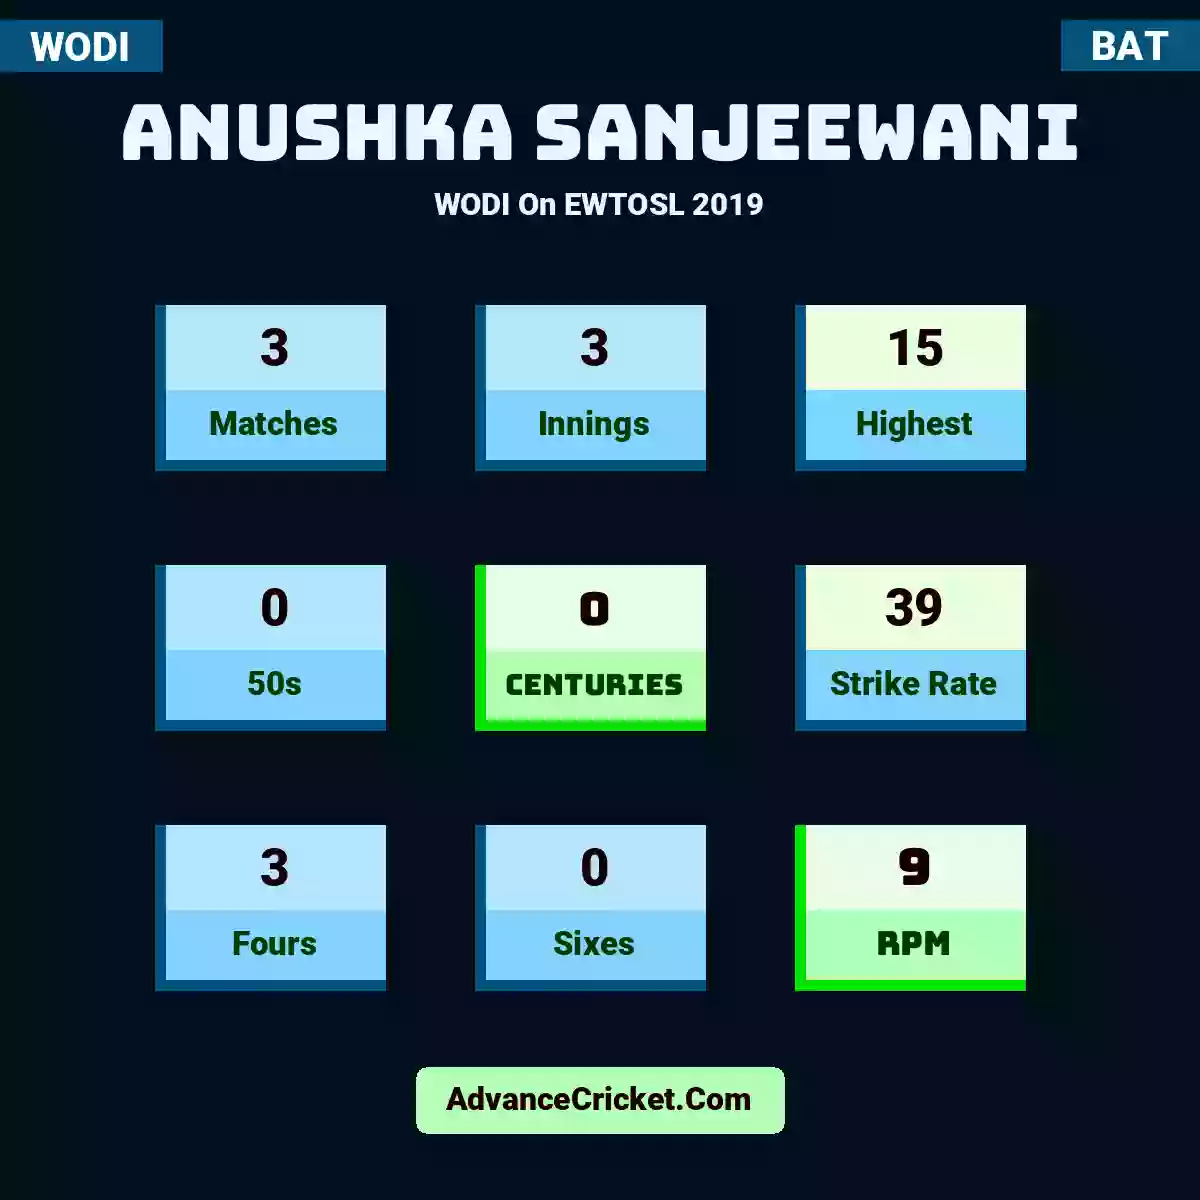 Anushka Sanjeewani WODI  On EWTOSL 2019, Anushka Sanjeewani played 3 matches, scored 15 runs as highest, 0 half-centuries, and 0 centuries, with a strike rate of 39. A.Sanjeewani hit 3 fours and 0 sixes, with an RPM of 9.